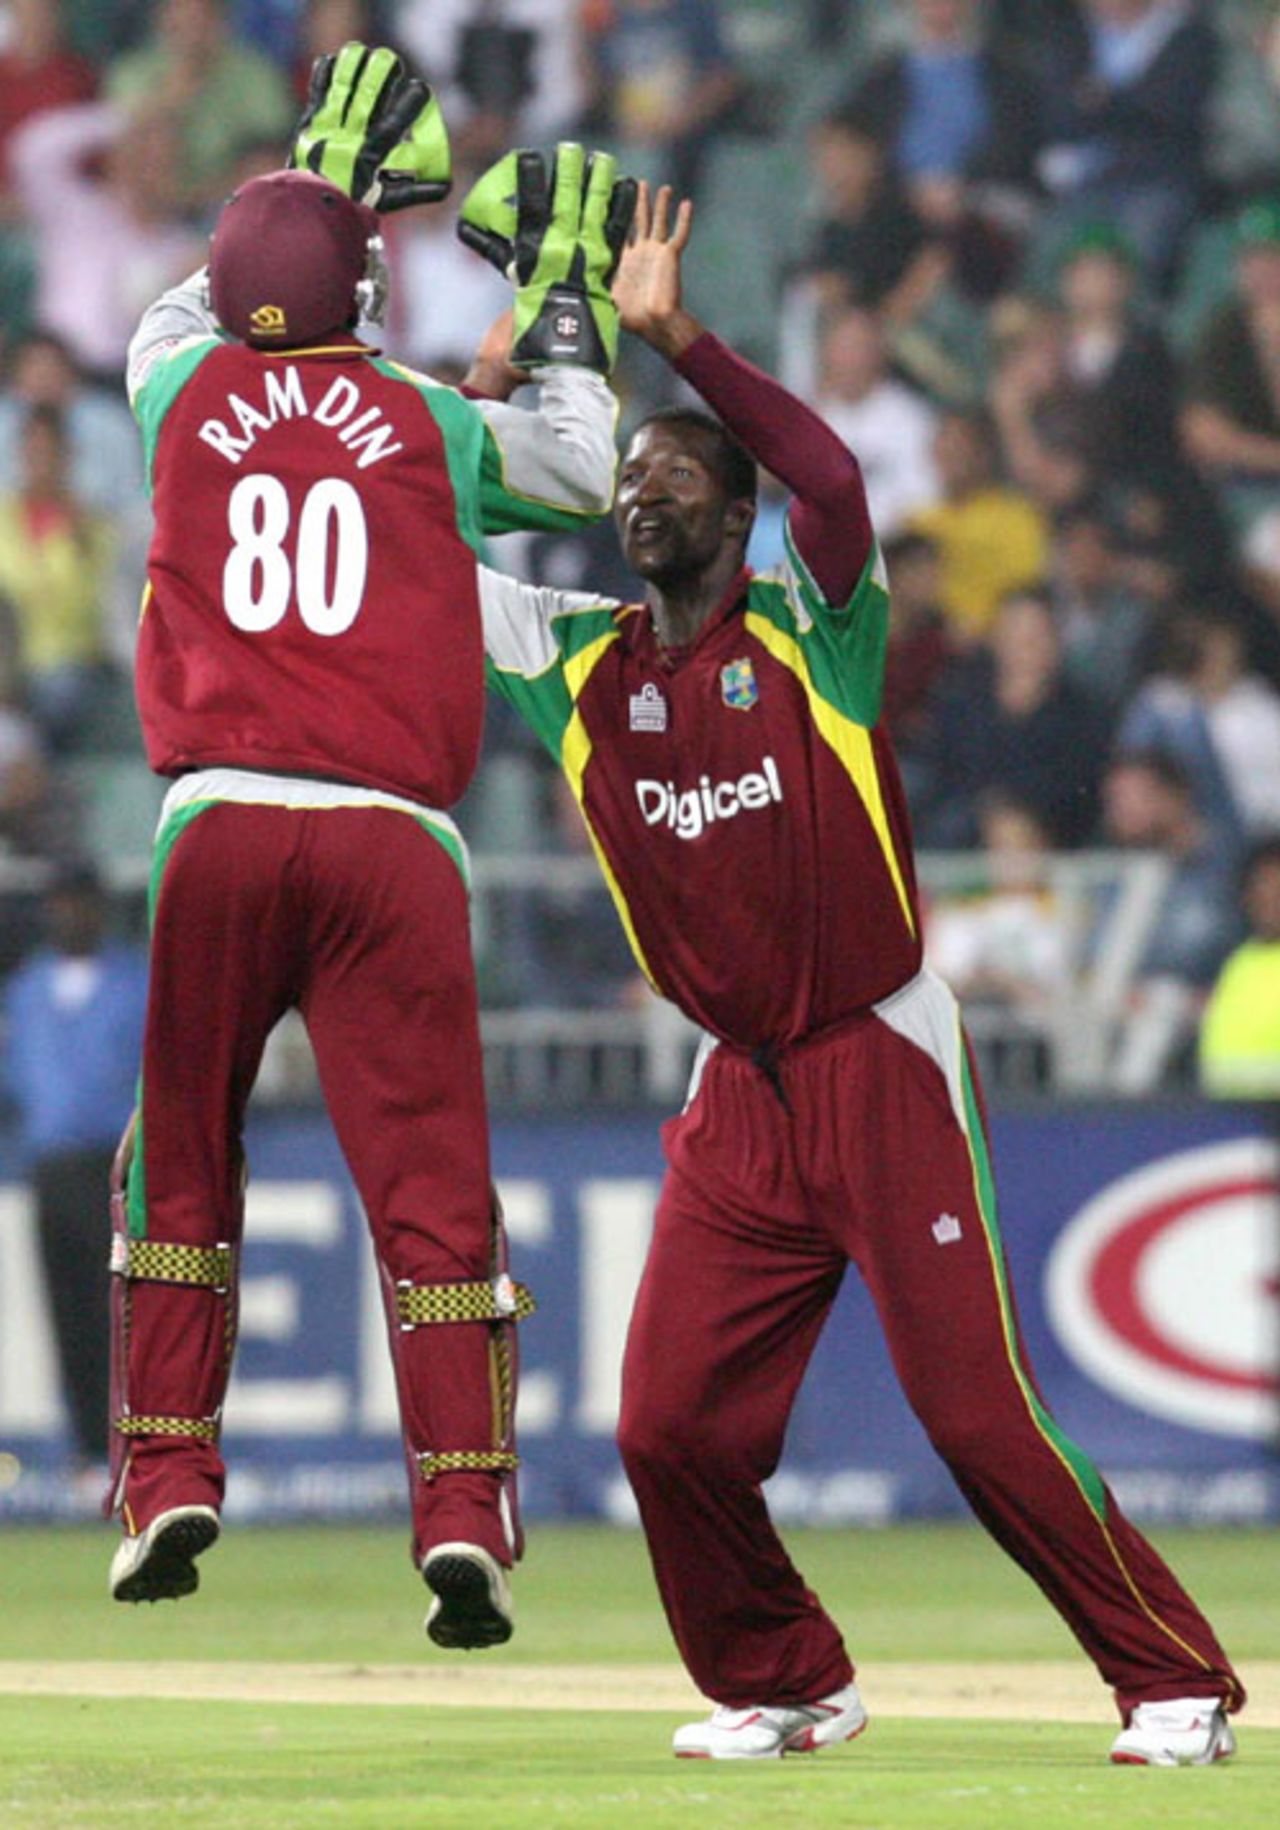 Extra-high fives ... Darren Sammy celebrates with Denesh Ramdin, South Africa v West Indies, 2nd Twenty20, Wanderers, January 18, 2008